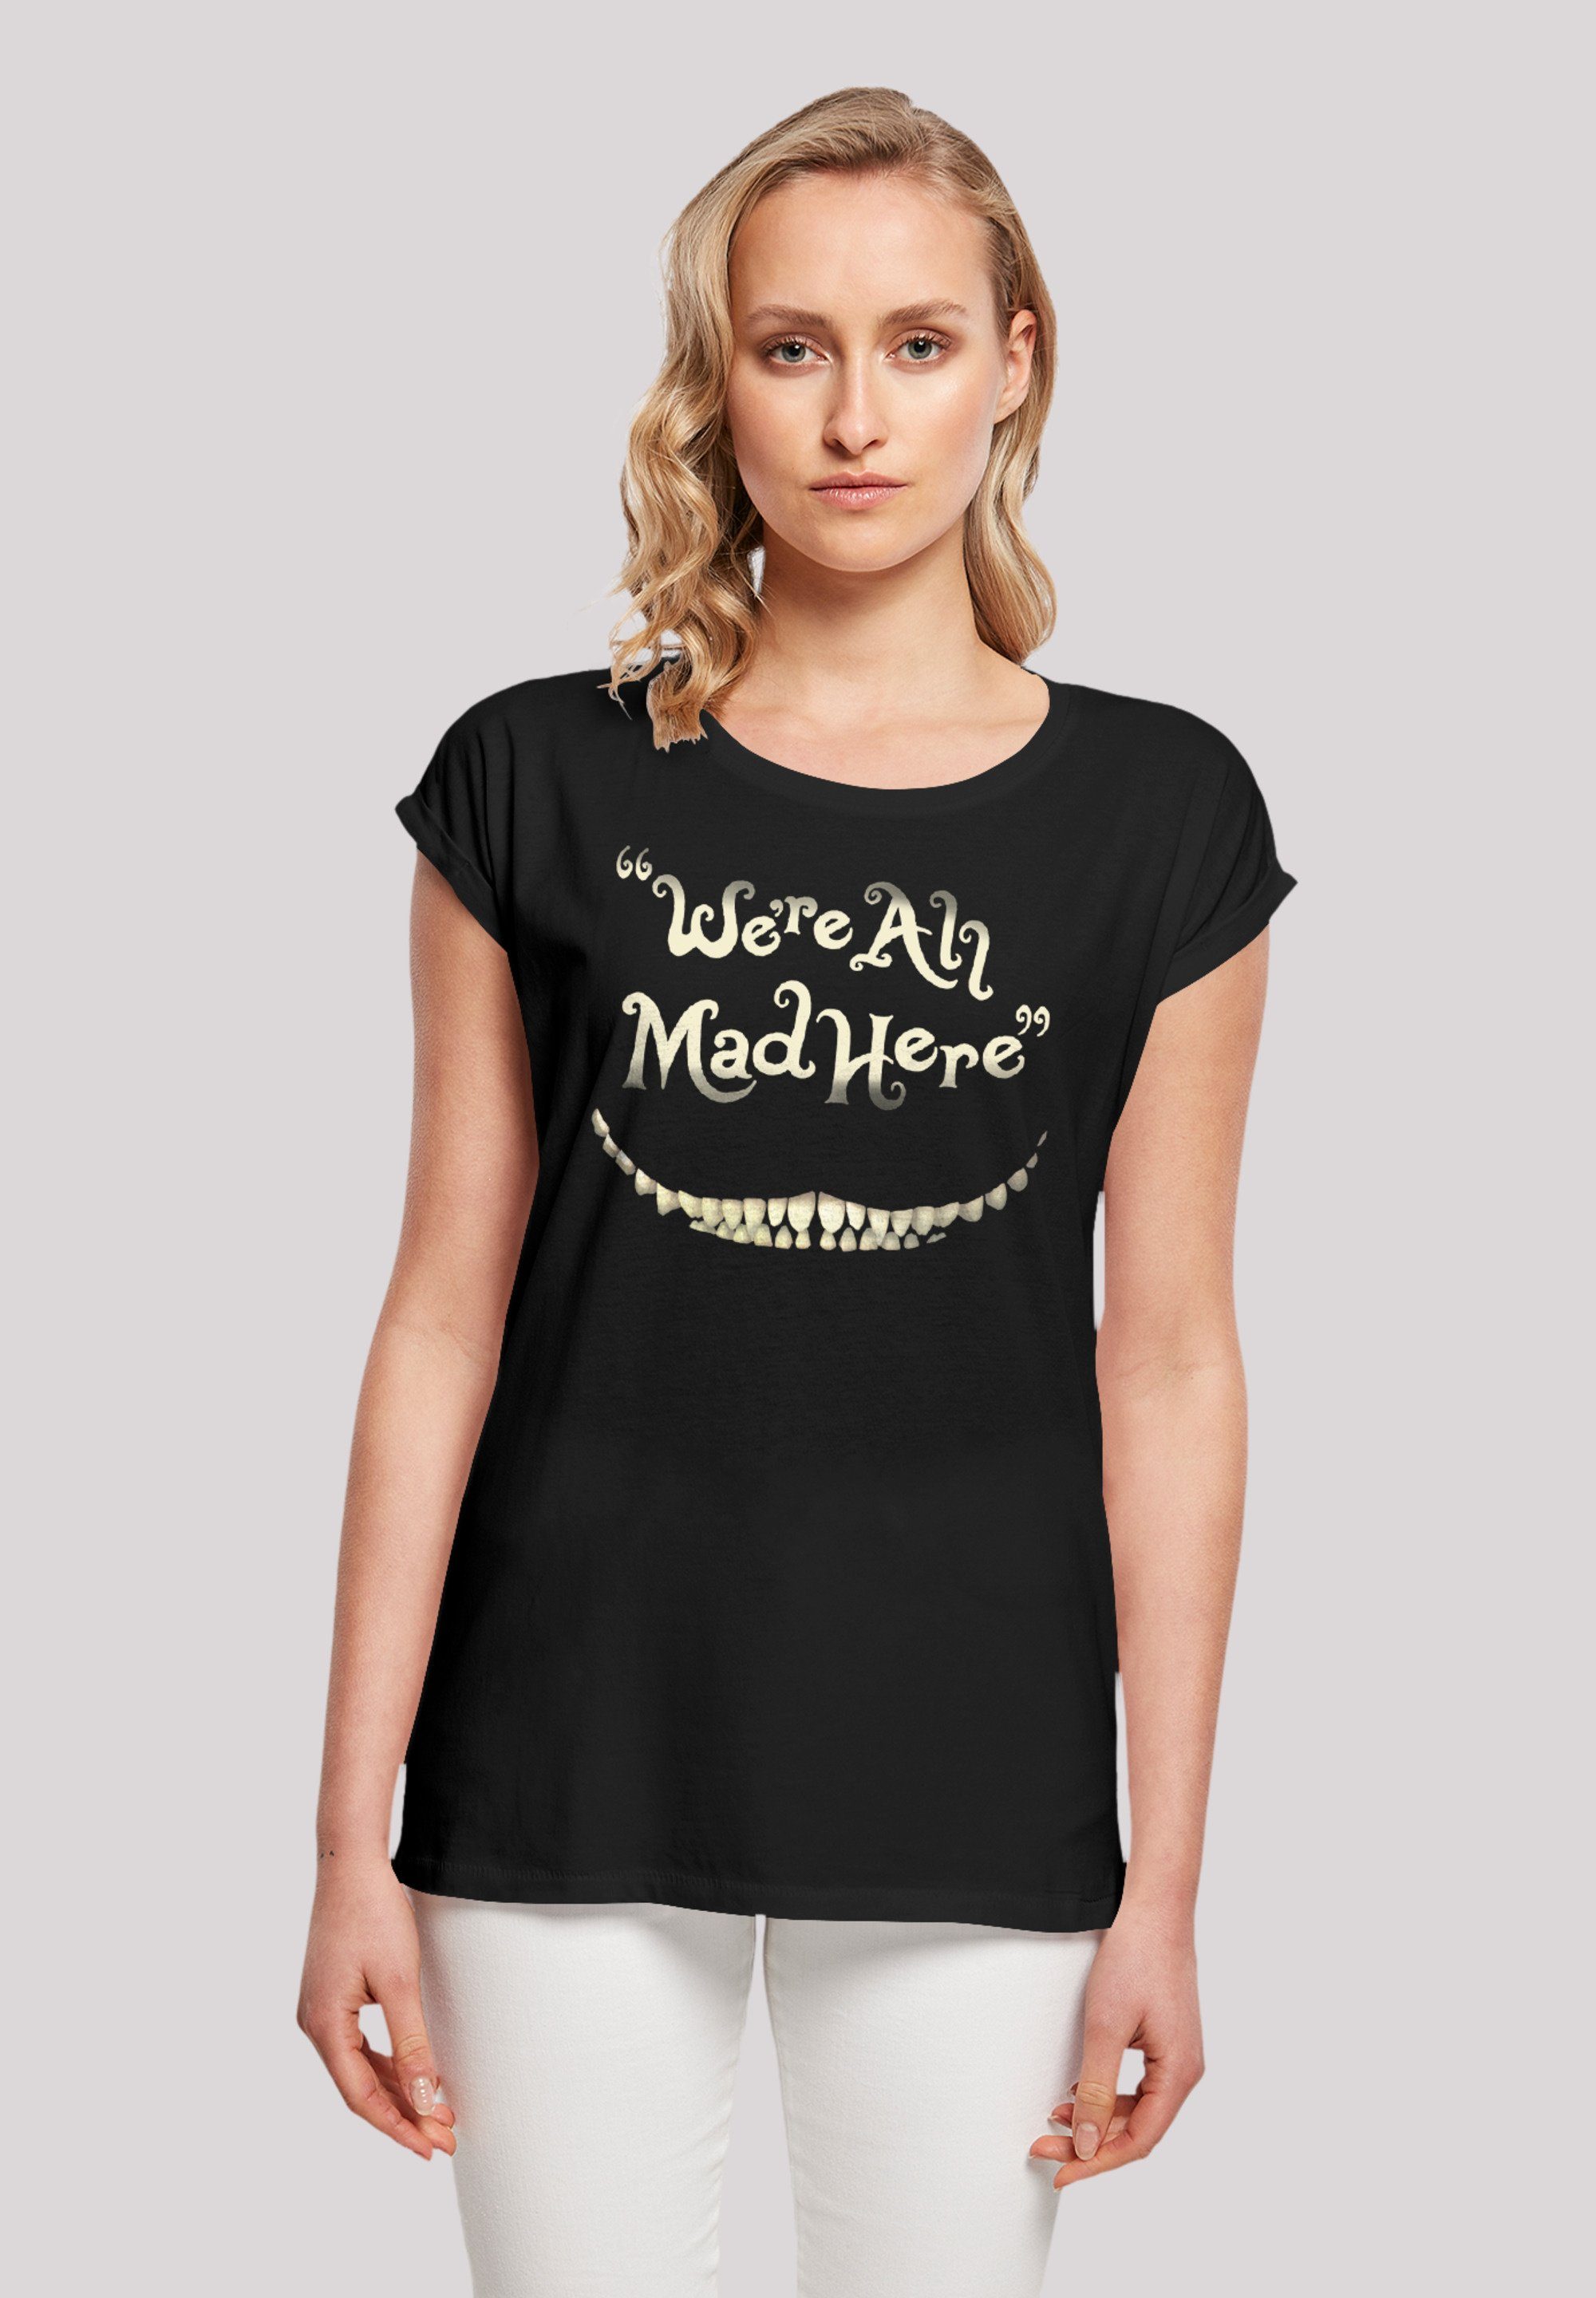 F4NT4STIC T-Shirt Disney Alice im Here Qualität Smile Premium Wunderland Mad